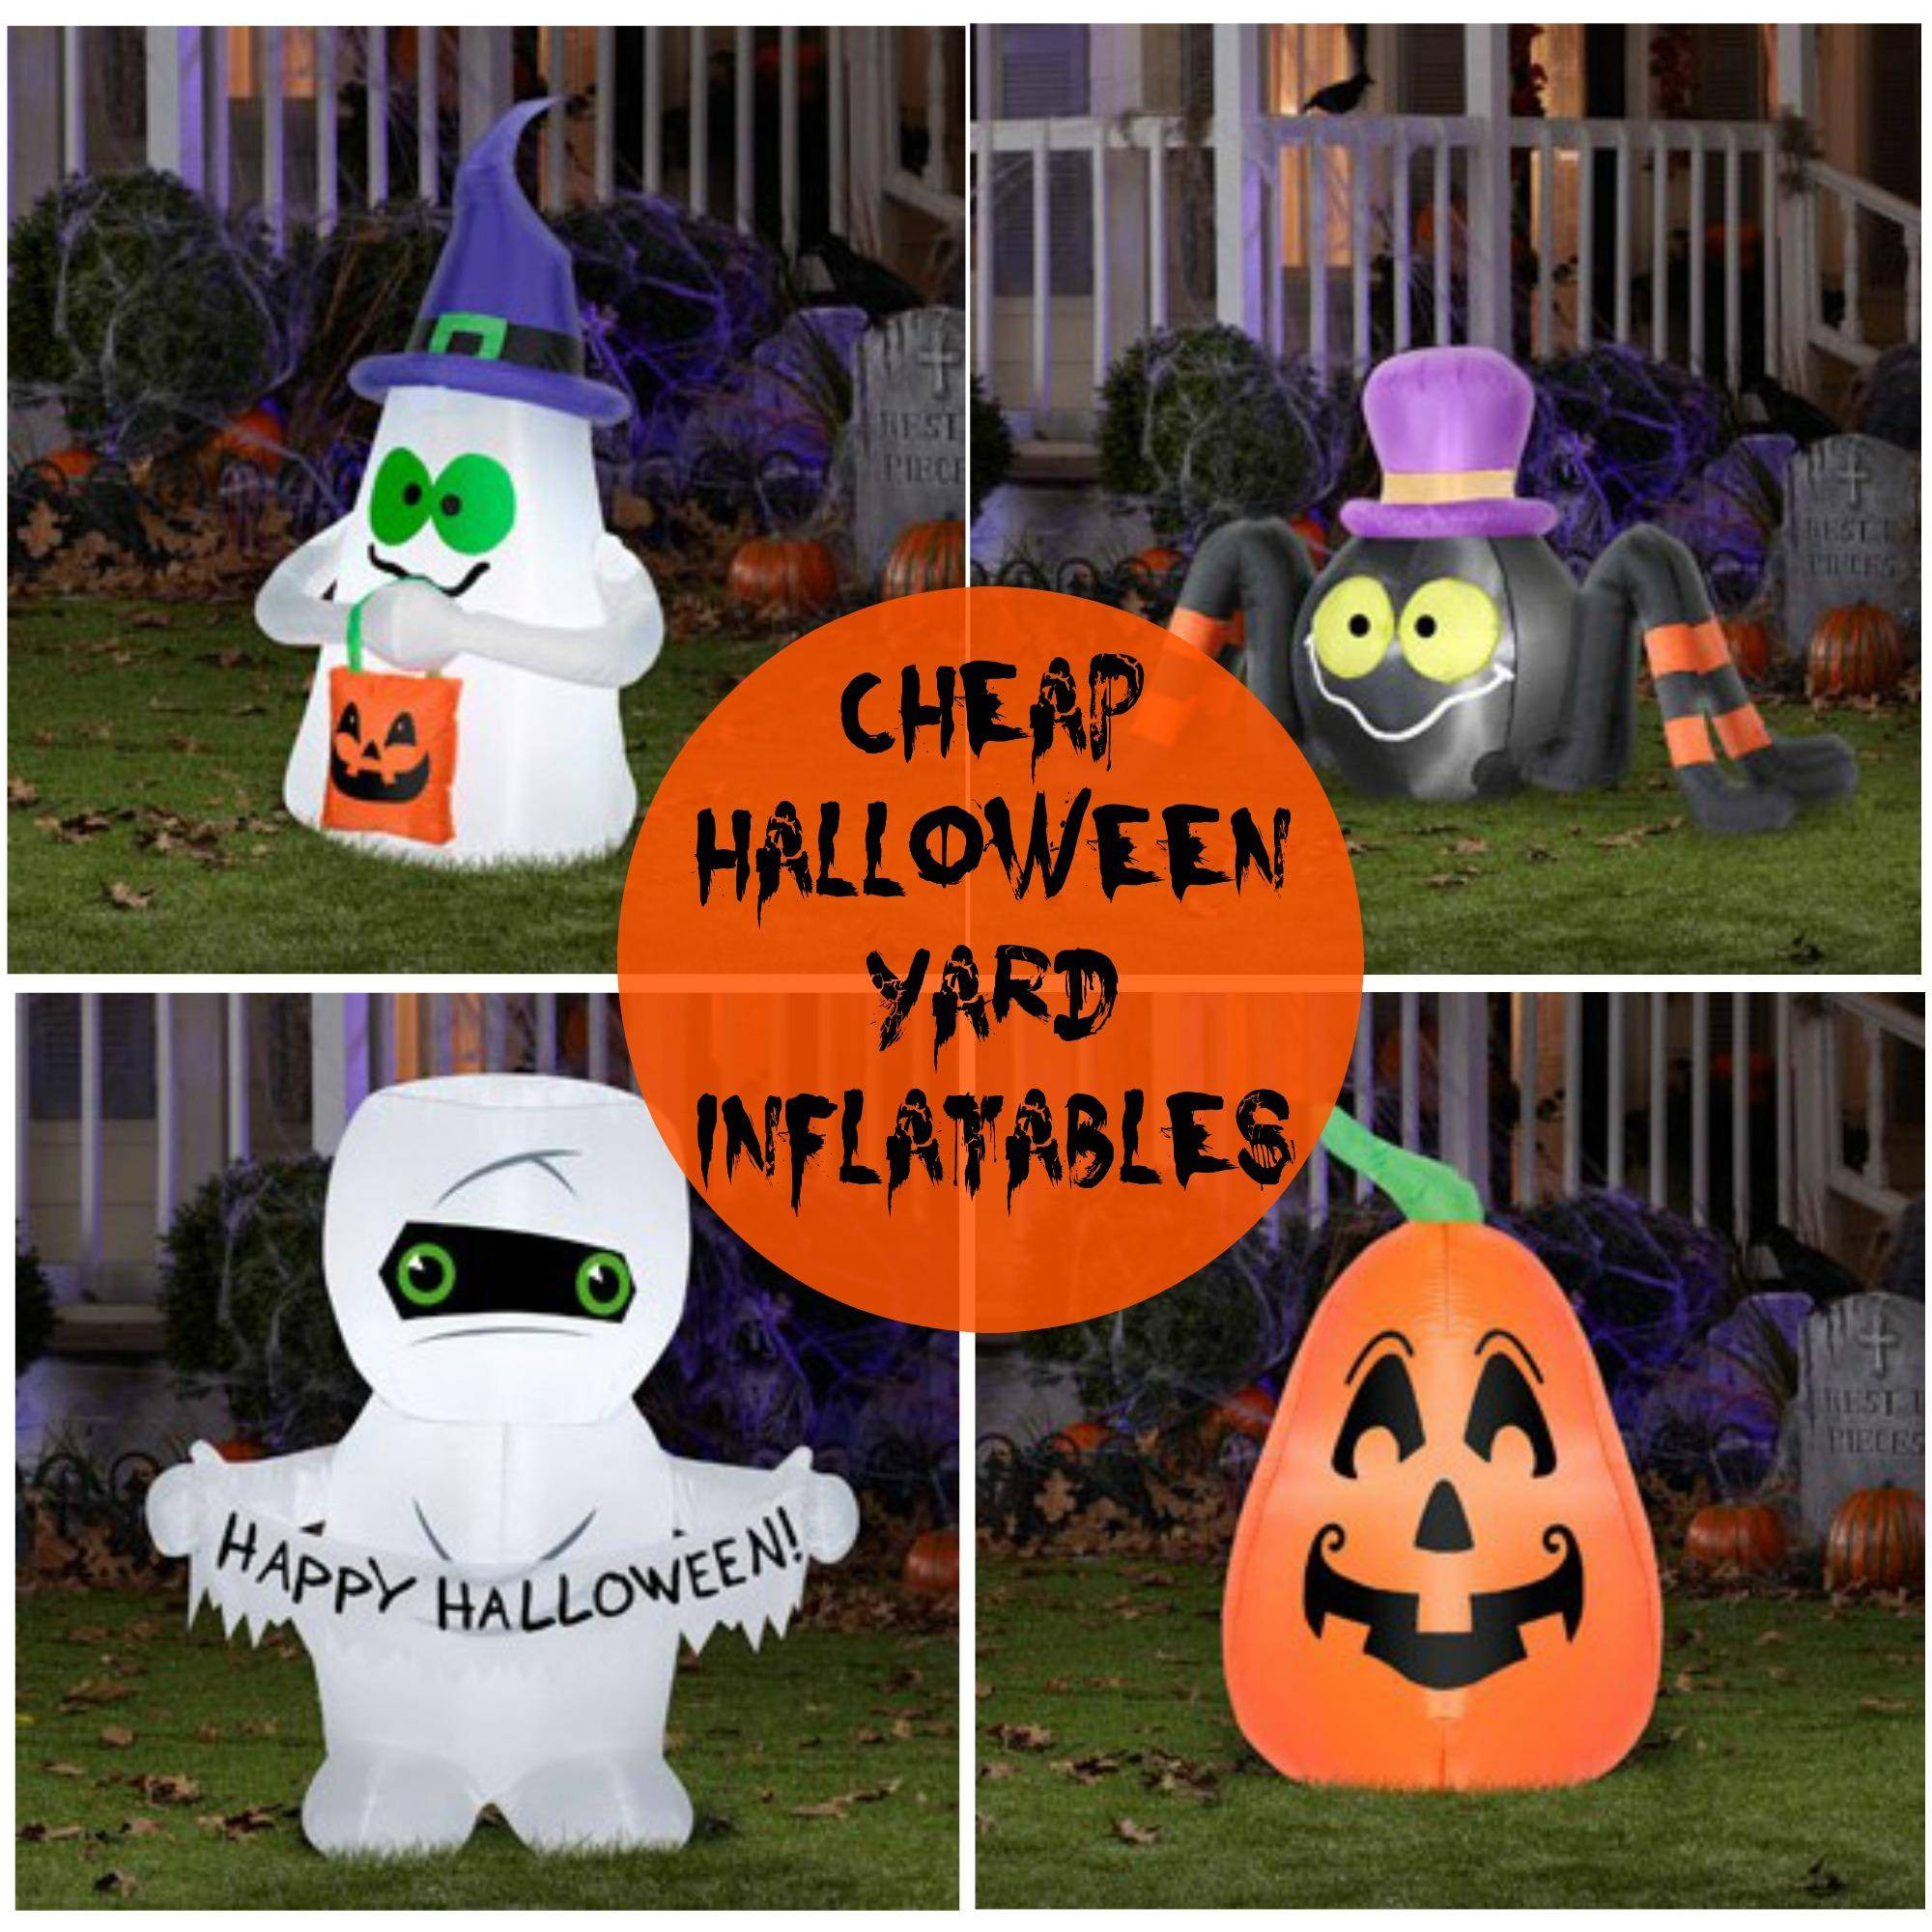 Halloween Outdoor Inflatables
 Cheap Halloween Yard Inflatables